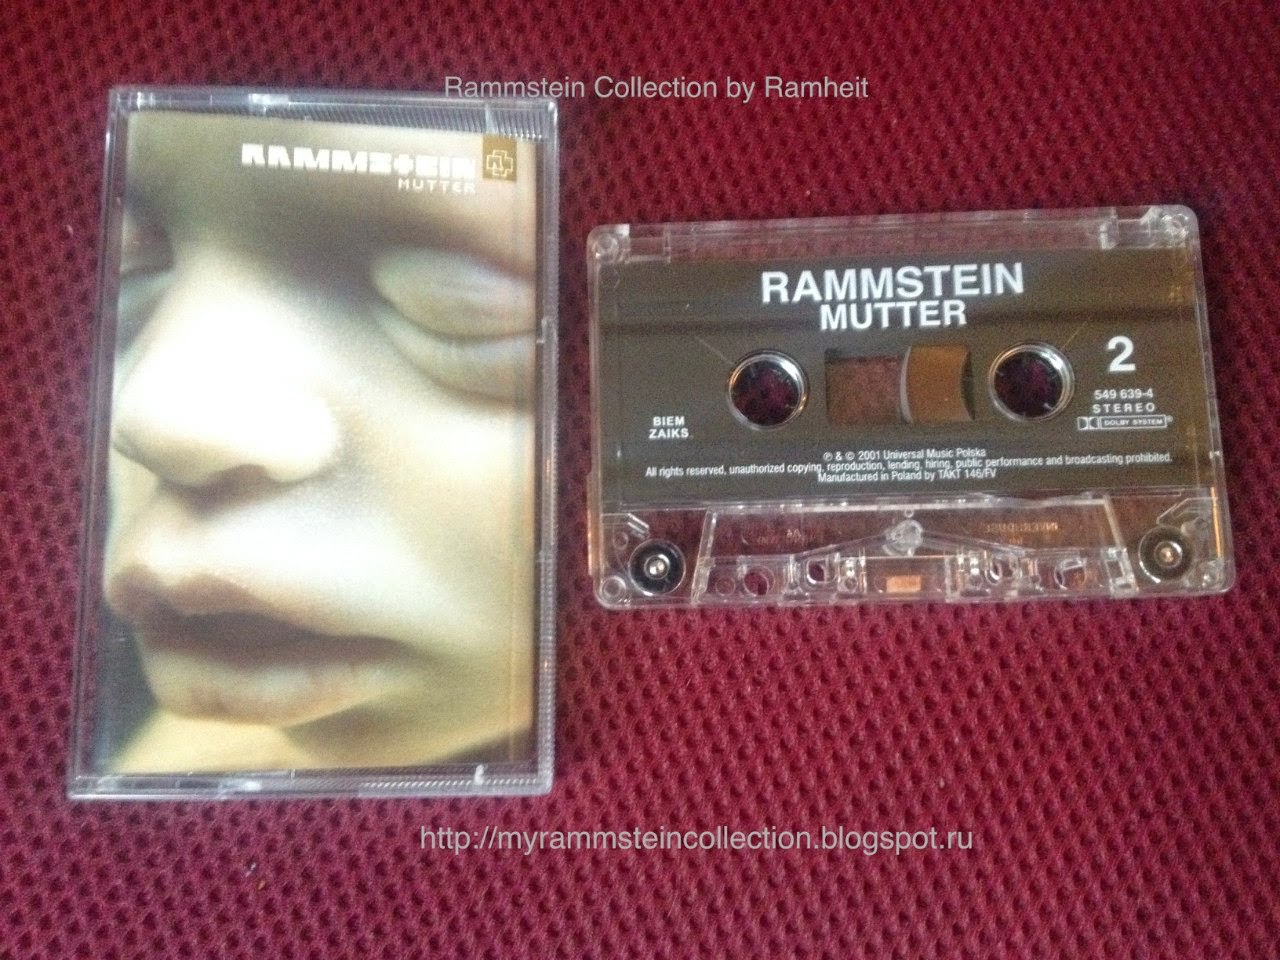 Рамштайн муттер текст. Rammstein Mutter кассета. Rammstein Mutter обложка кассеты. Кассеты и диски Rammstein Mutter. Rammstein Mutter альбом кассета.